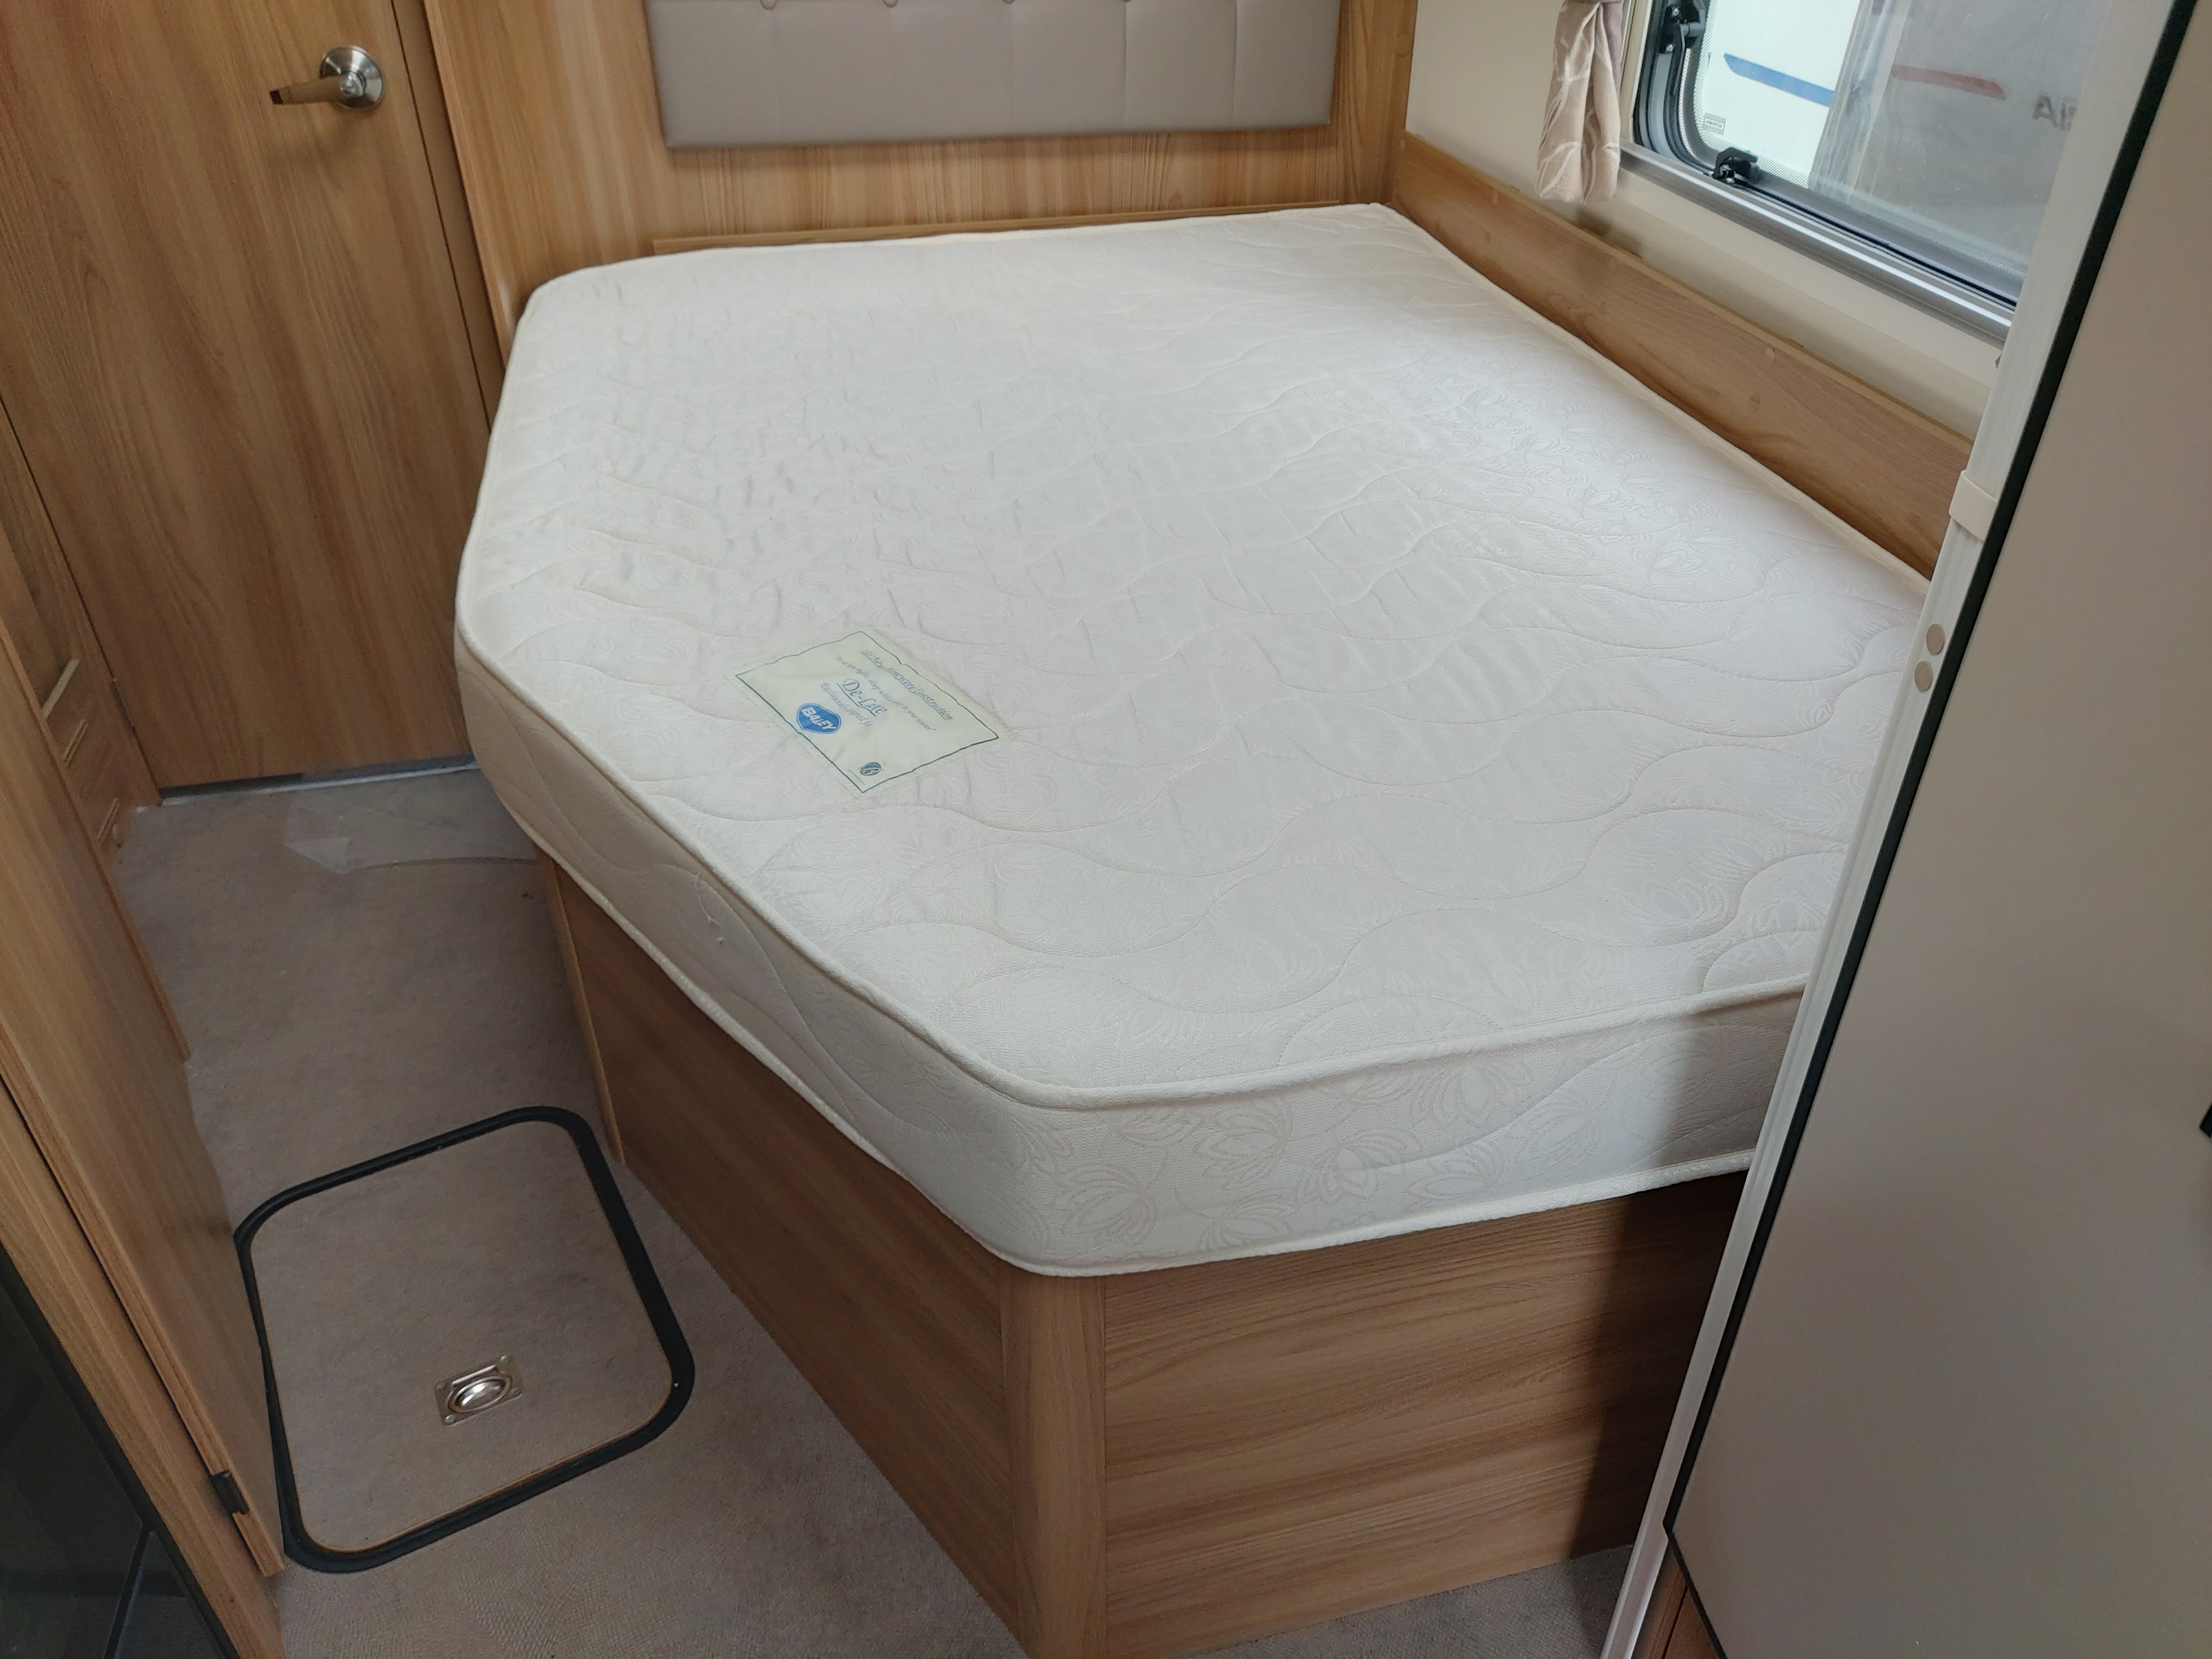 2016 Bailey Unicorn Valencia 4 Berth Fixed Bed E/Washroom Caravan, MMover, Solar